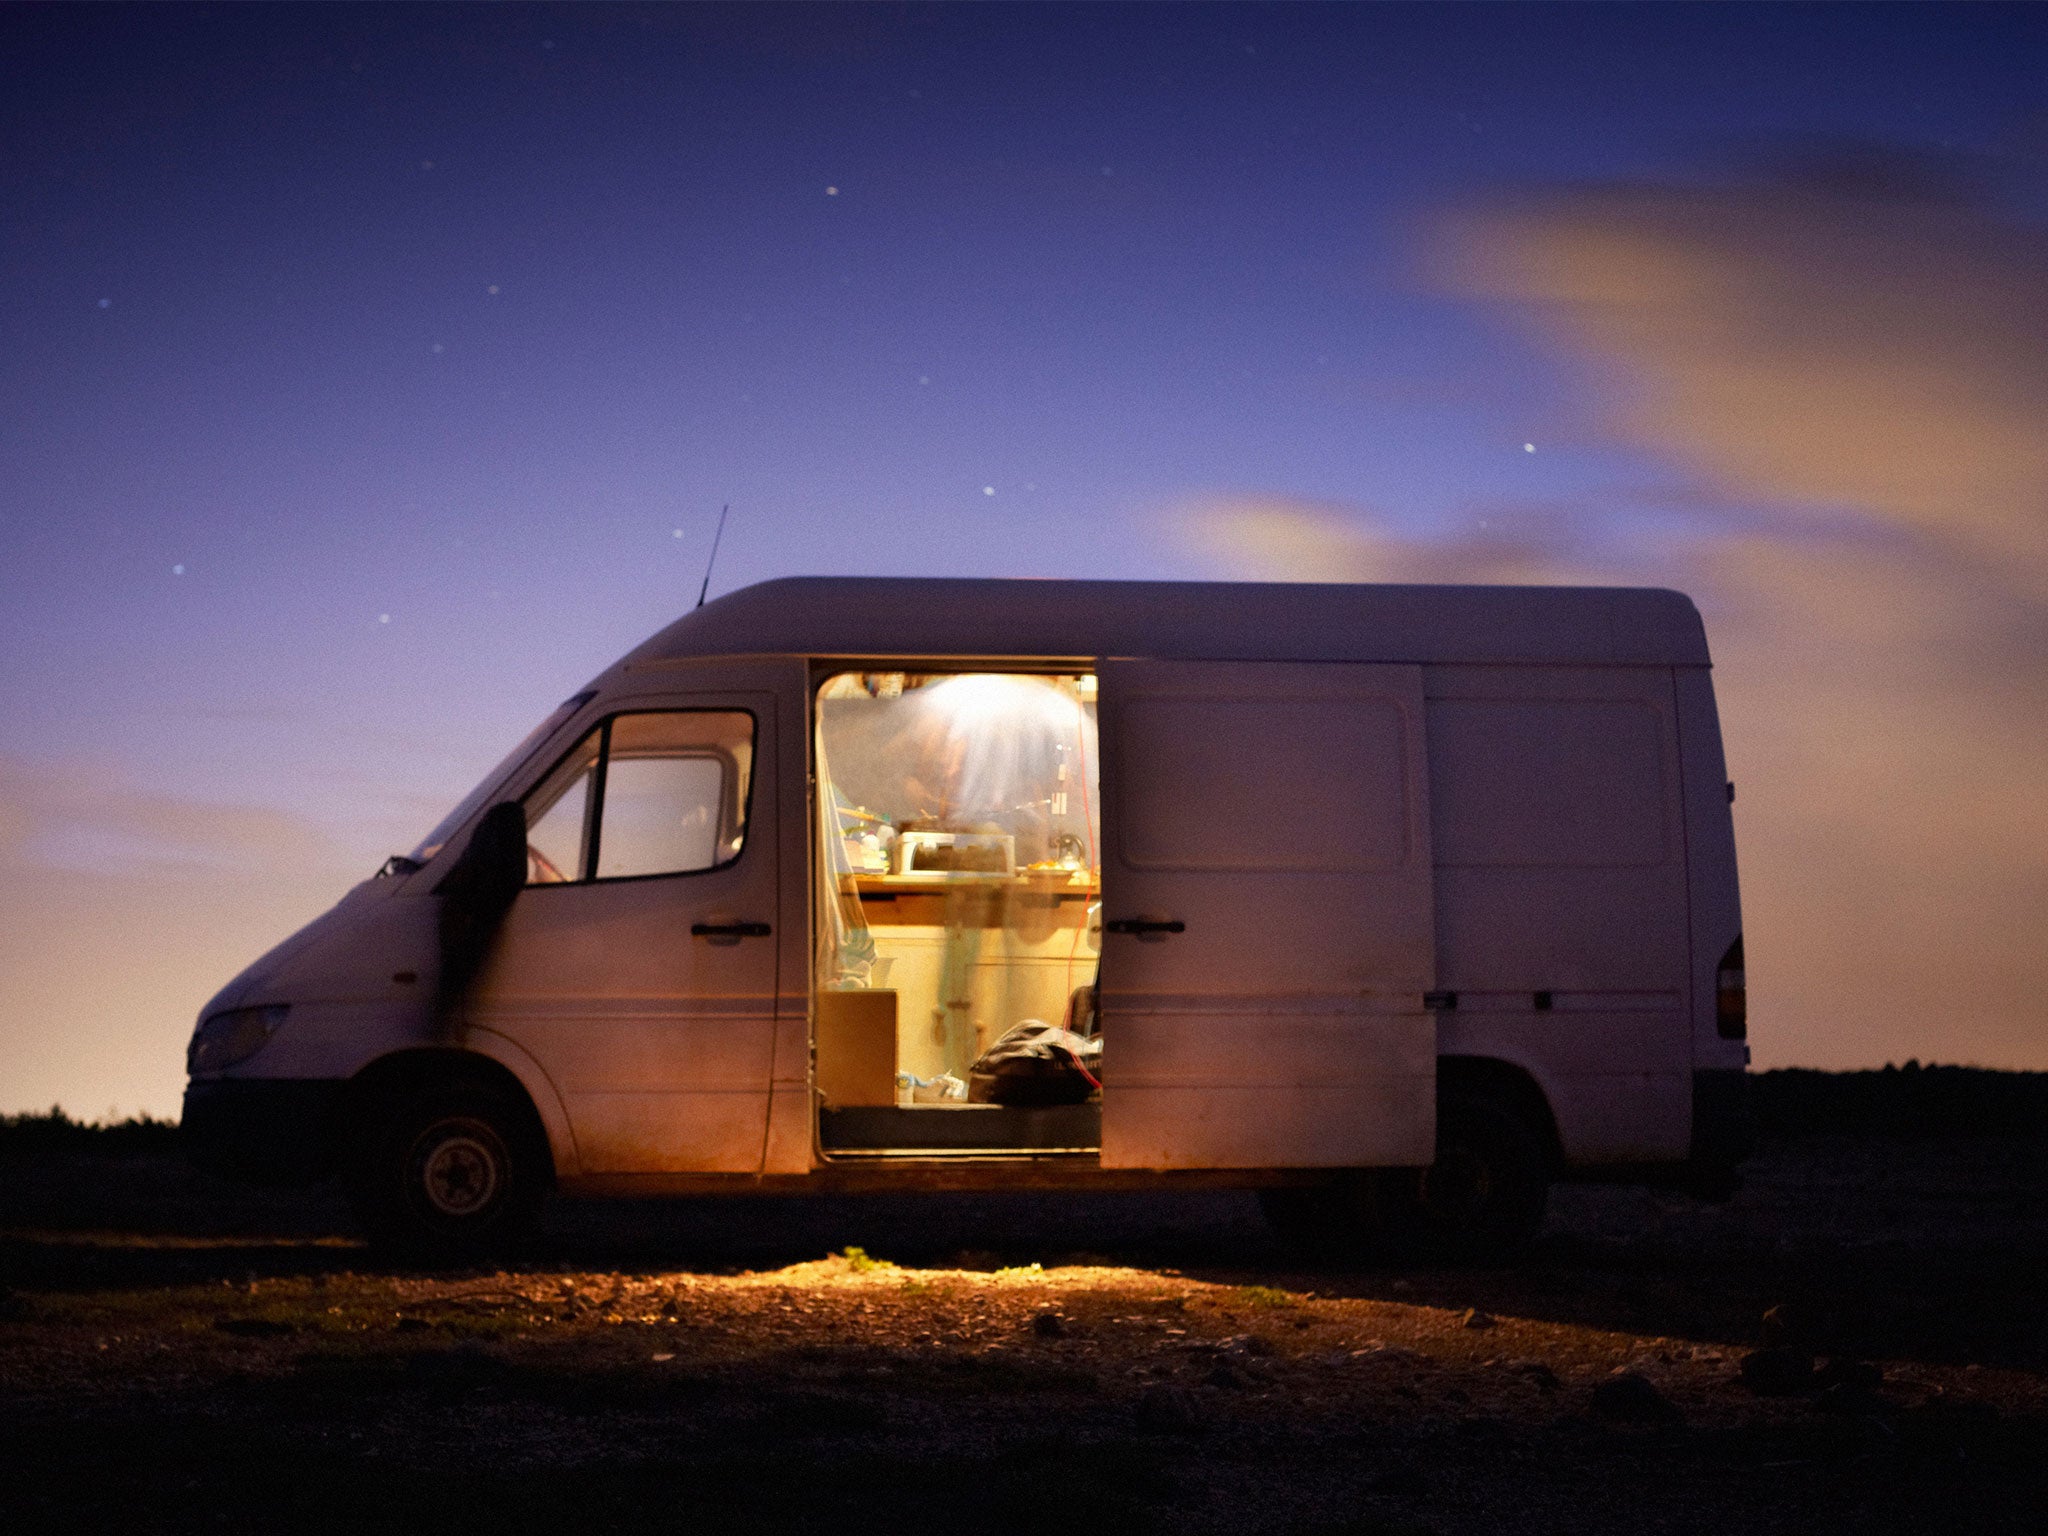 Liam Arthur spent a week living with Tim in his van in Fuerteventura, Canary Islands.